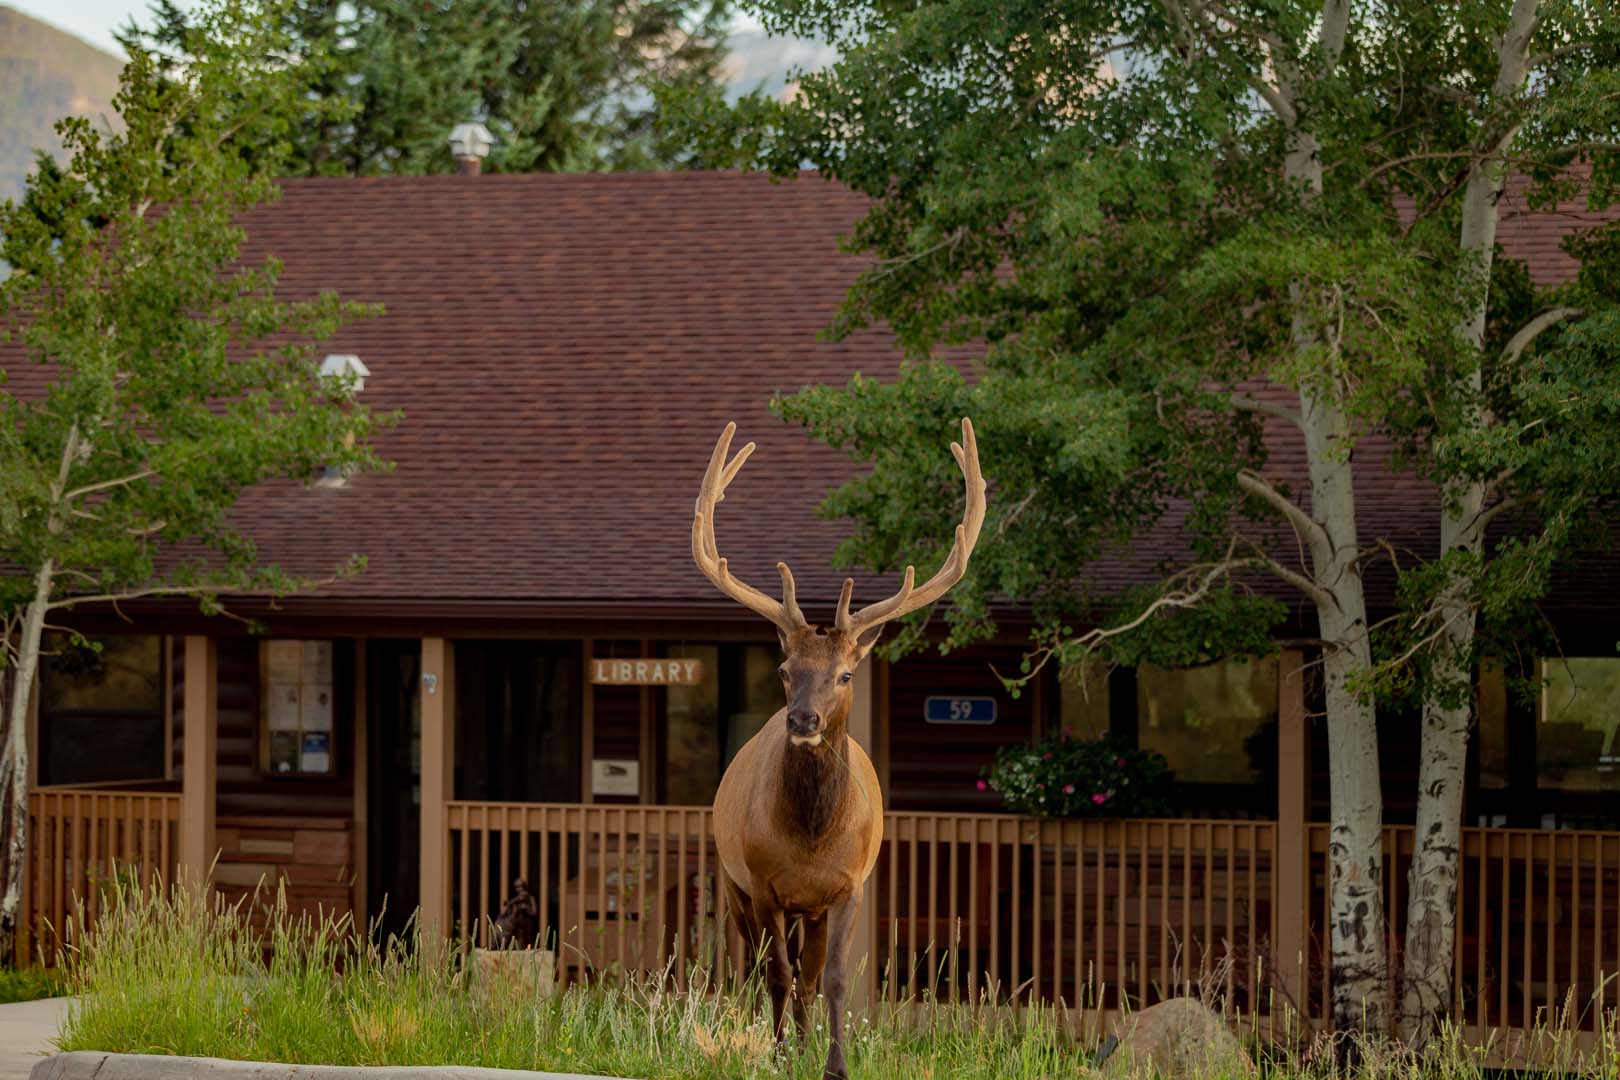 elk outside library